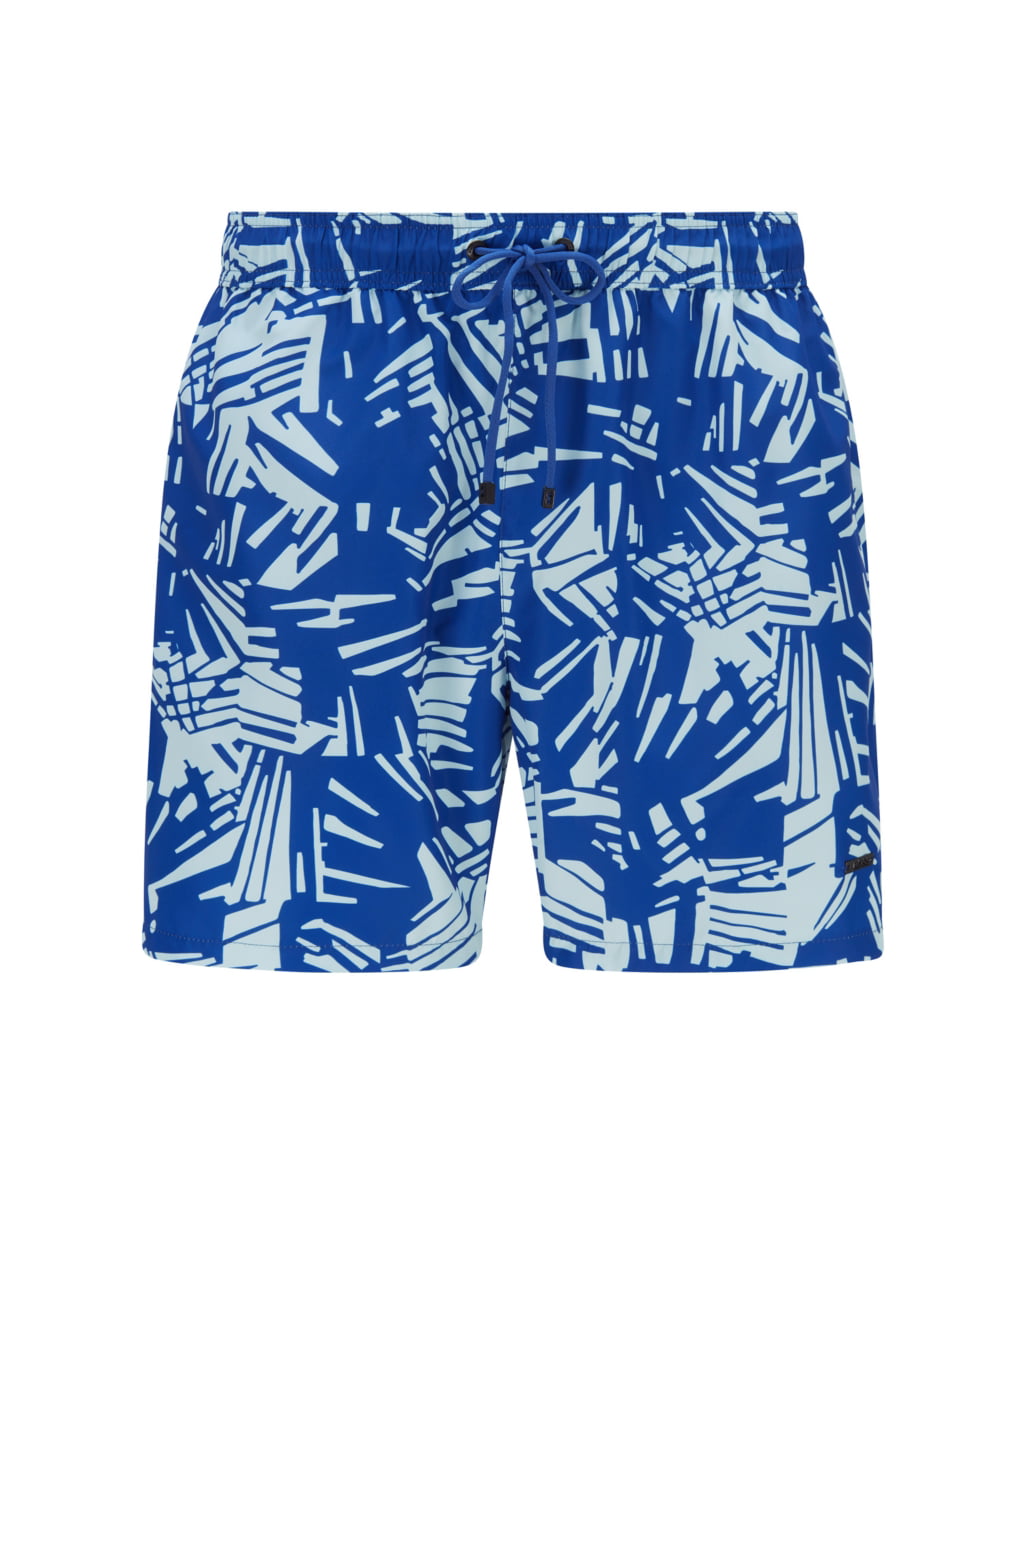 Mens Abstract Ribbon Summer Printed Quick Dry Board Shorts Swimwear Swim Trunks